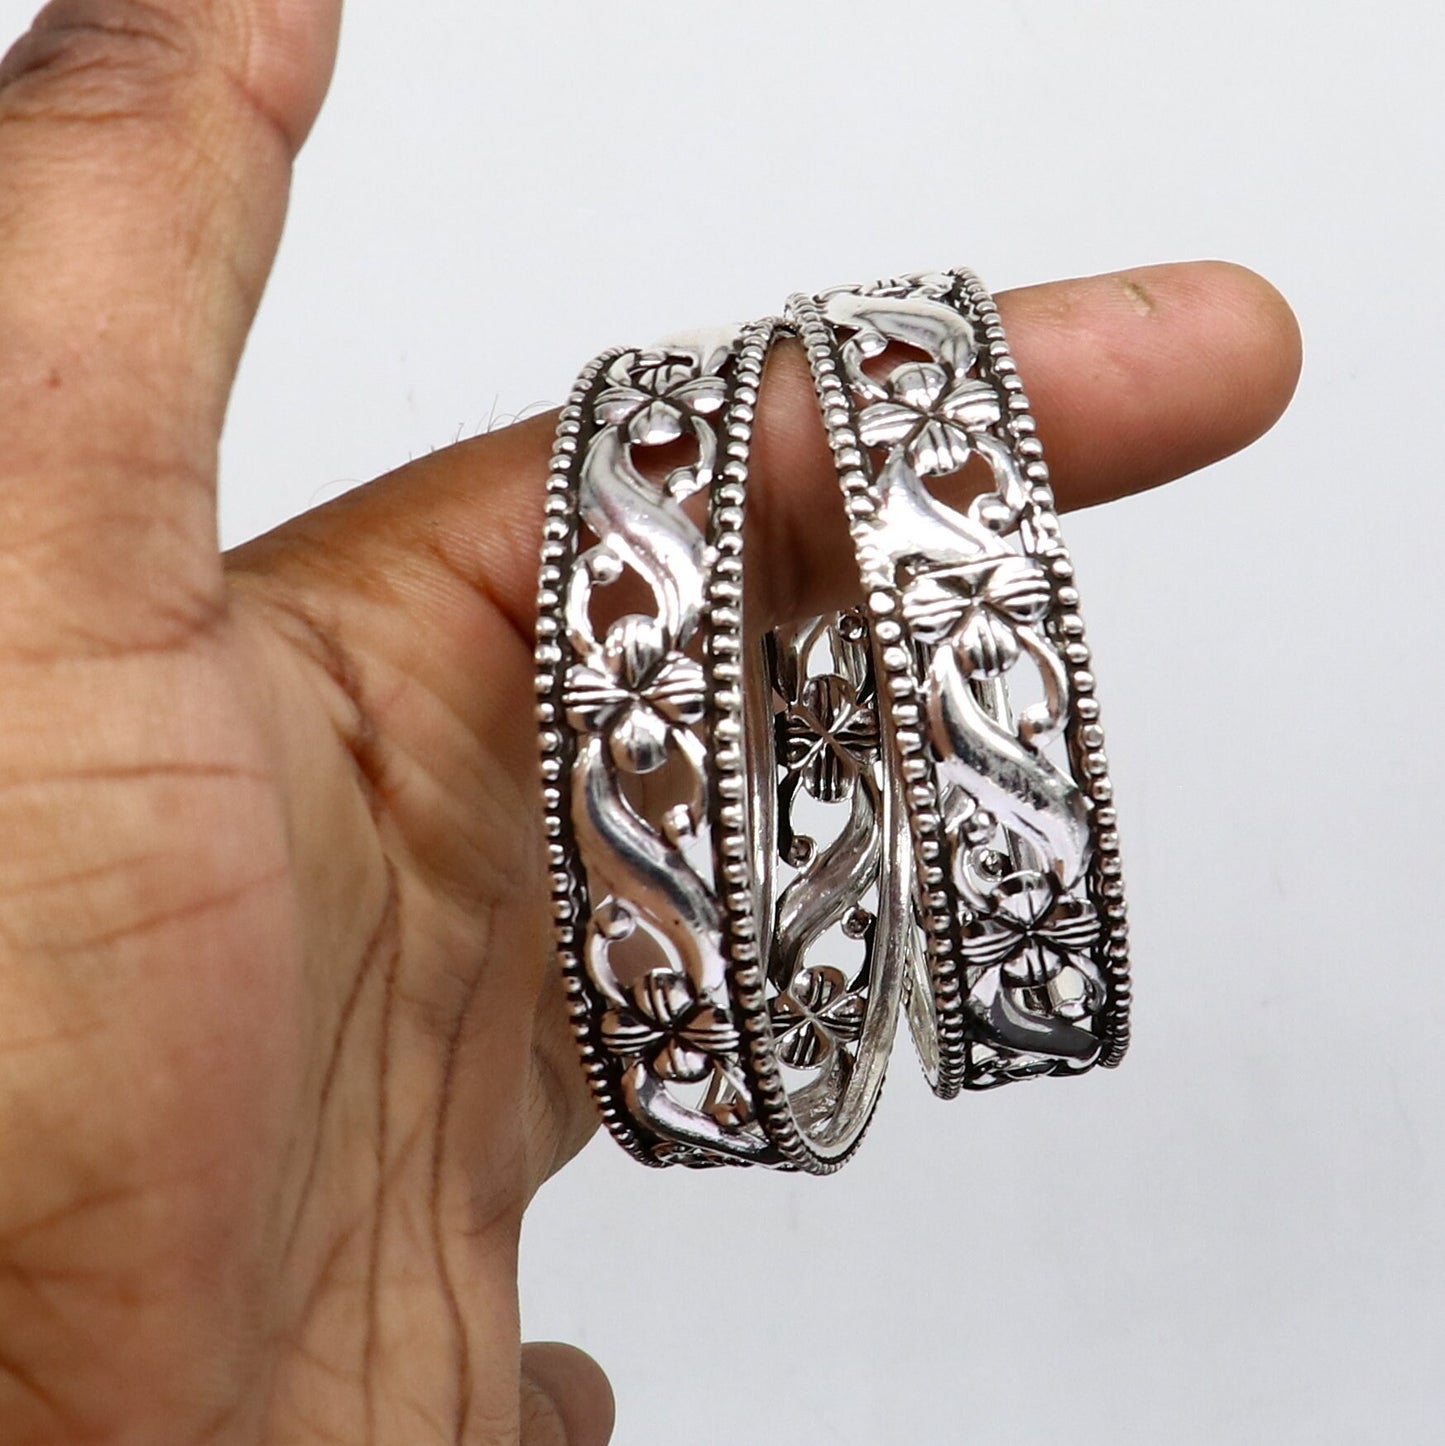 Floral style 925 sterling silver amazing customized bangle bracelet kada , best brides gifting ethnic stylish tribal fashion jewelry nba394 - TRIBAL ORNAMENTS